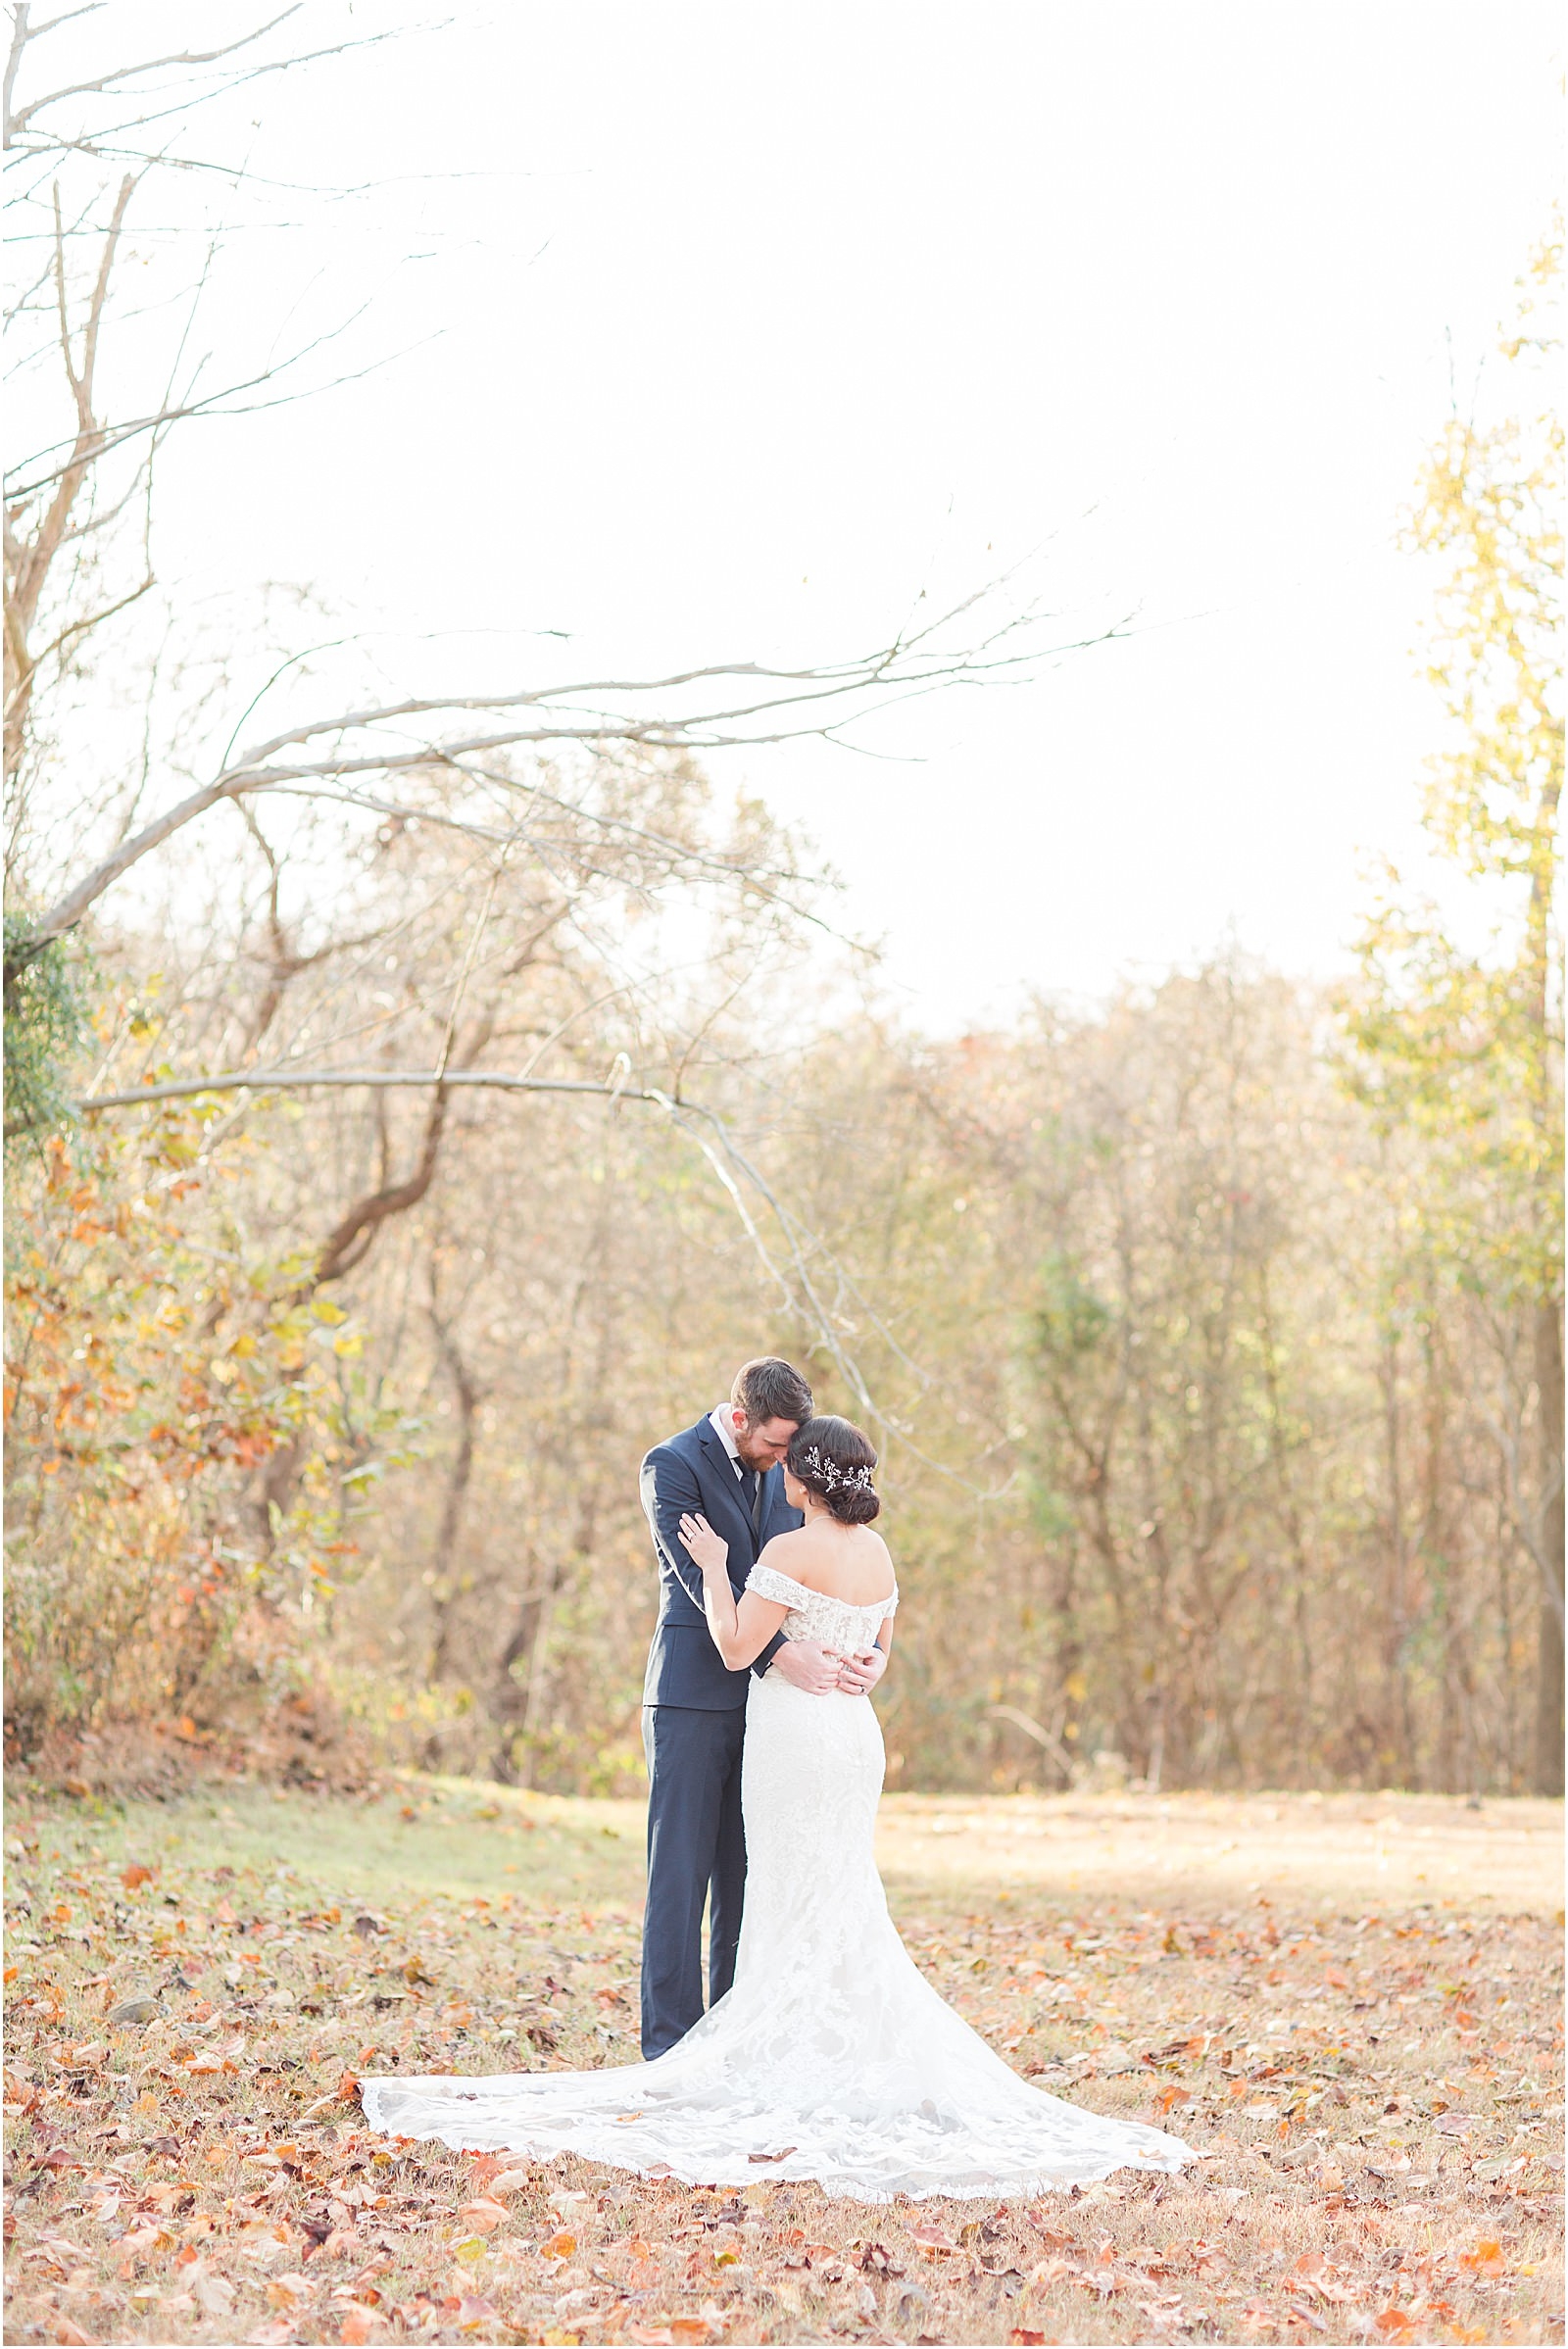 Walker and Alyssa's intimate fall wedding in Southern Indiana. | Wedding Photography | The Corner House Wedding | Southern Indiana Wedding | #fallwedding #intimatewedding | 041.jpg